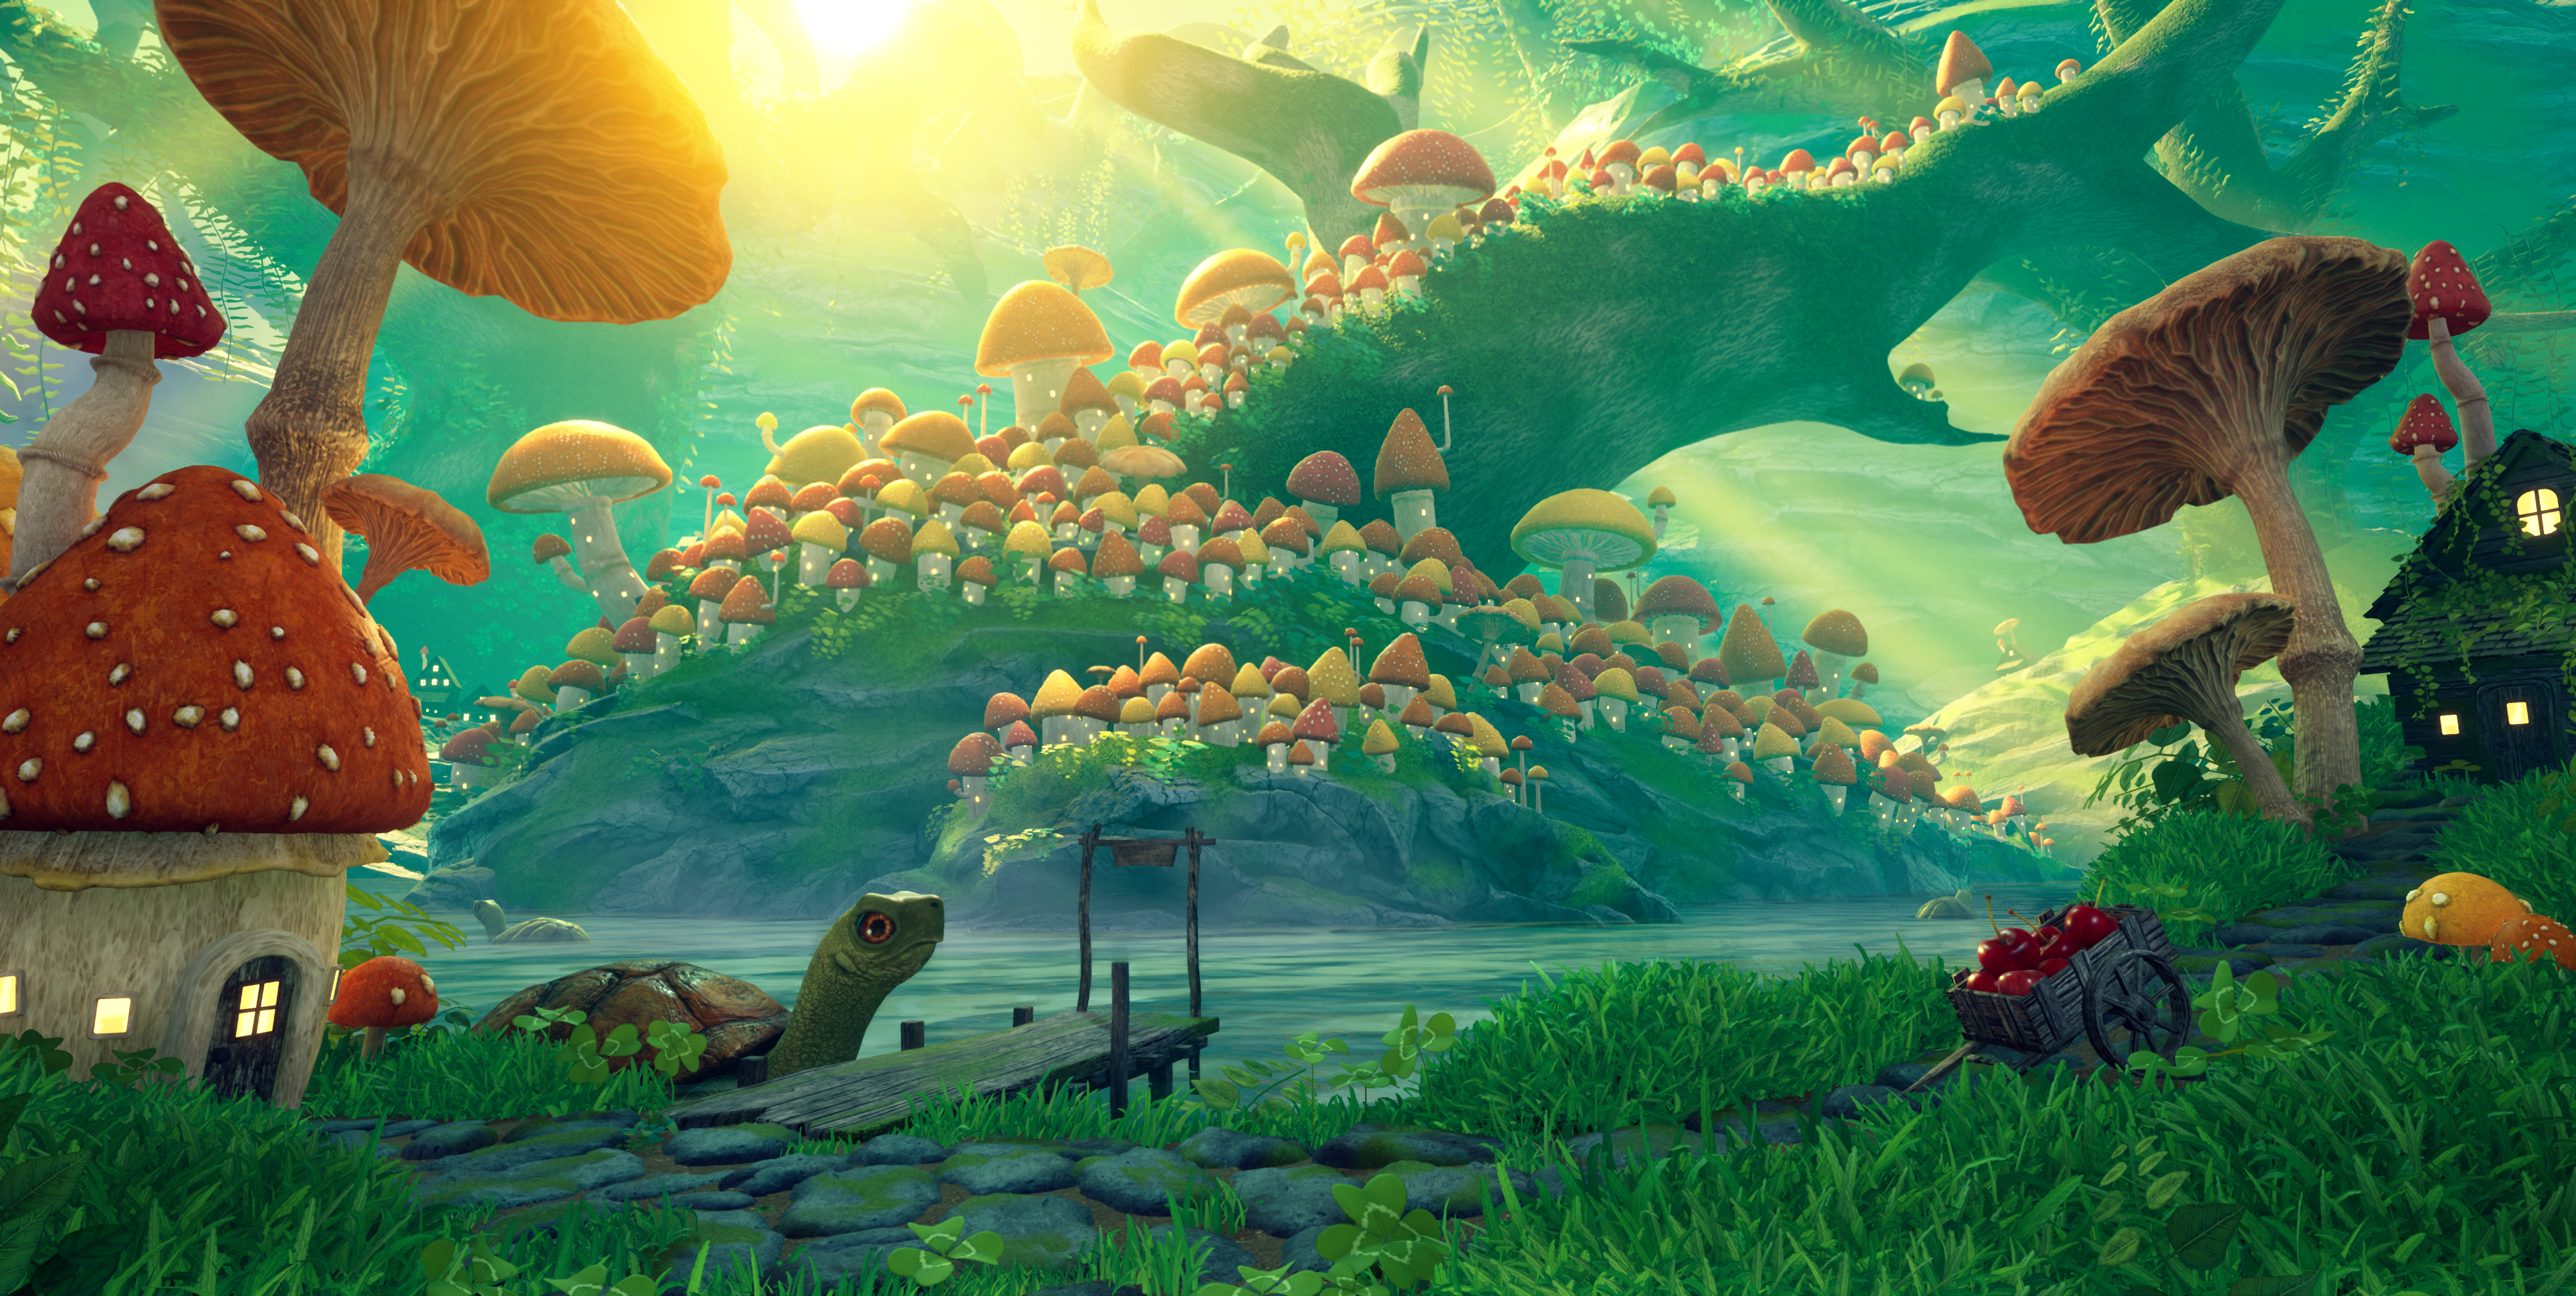 Bright, fantastical, lush world full of building sized mushrooms.